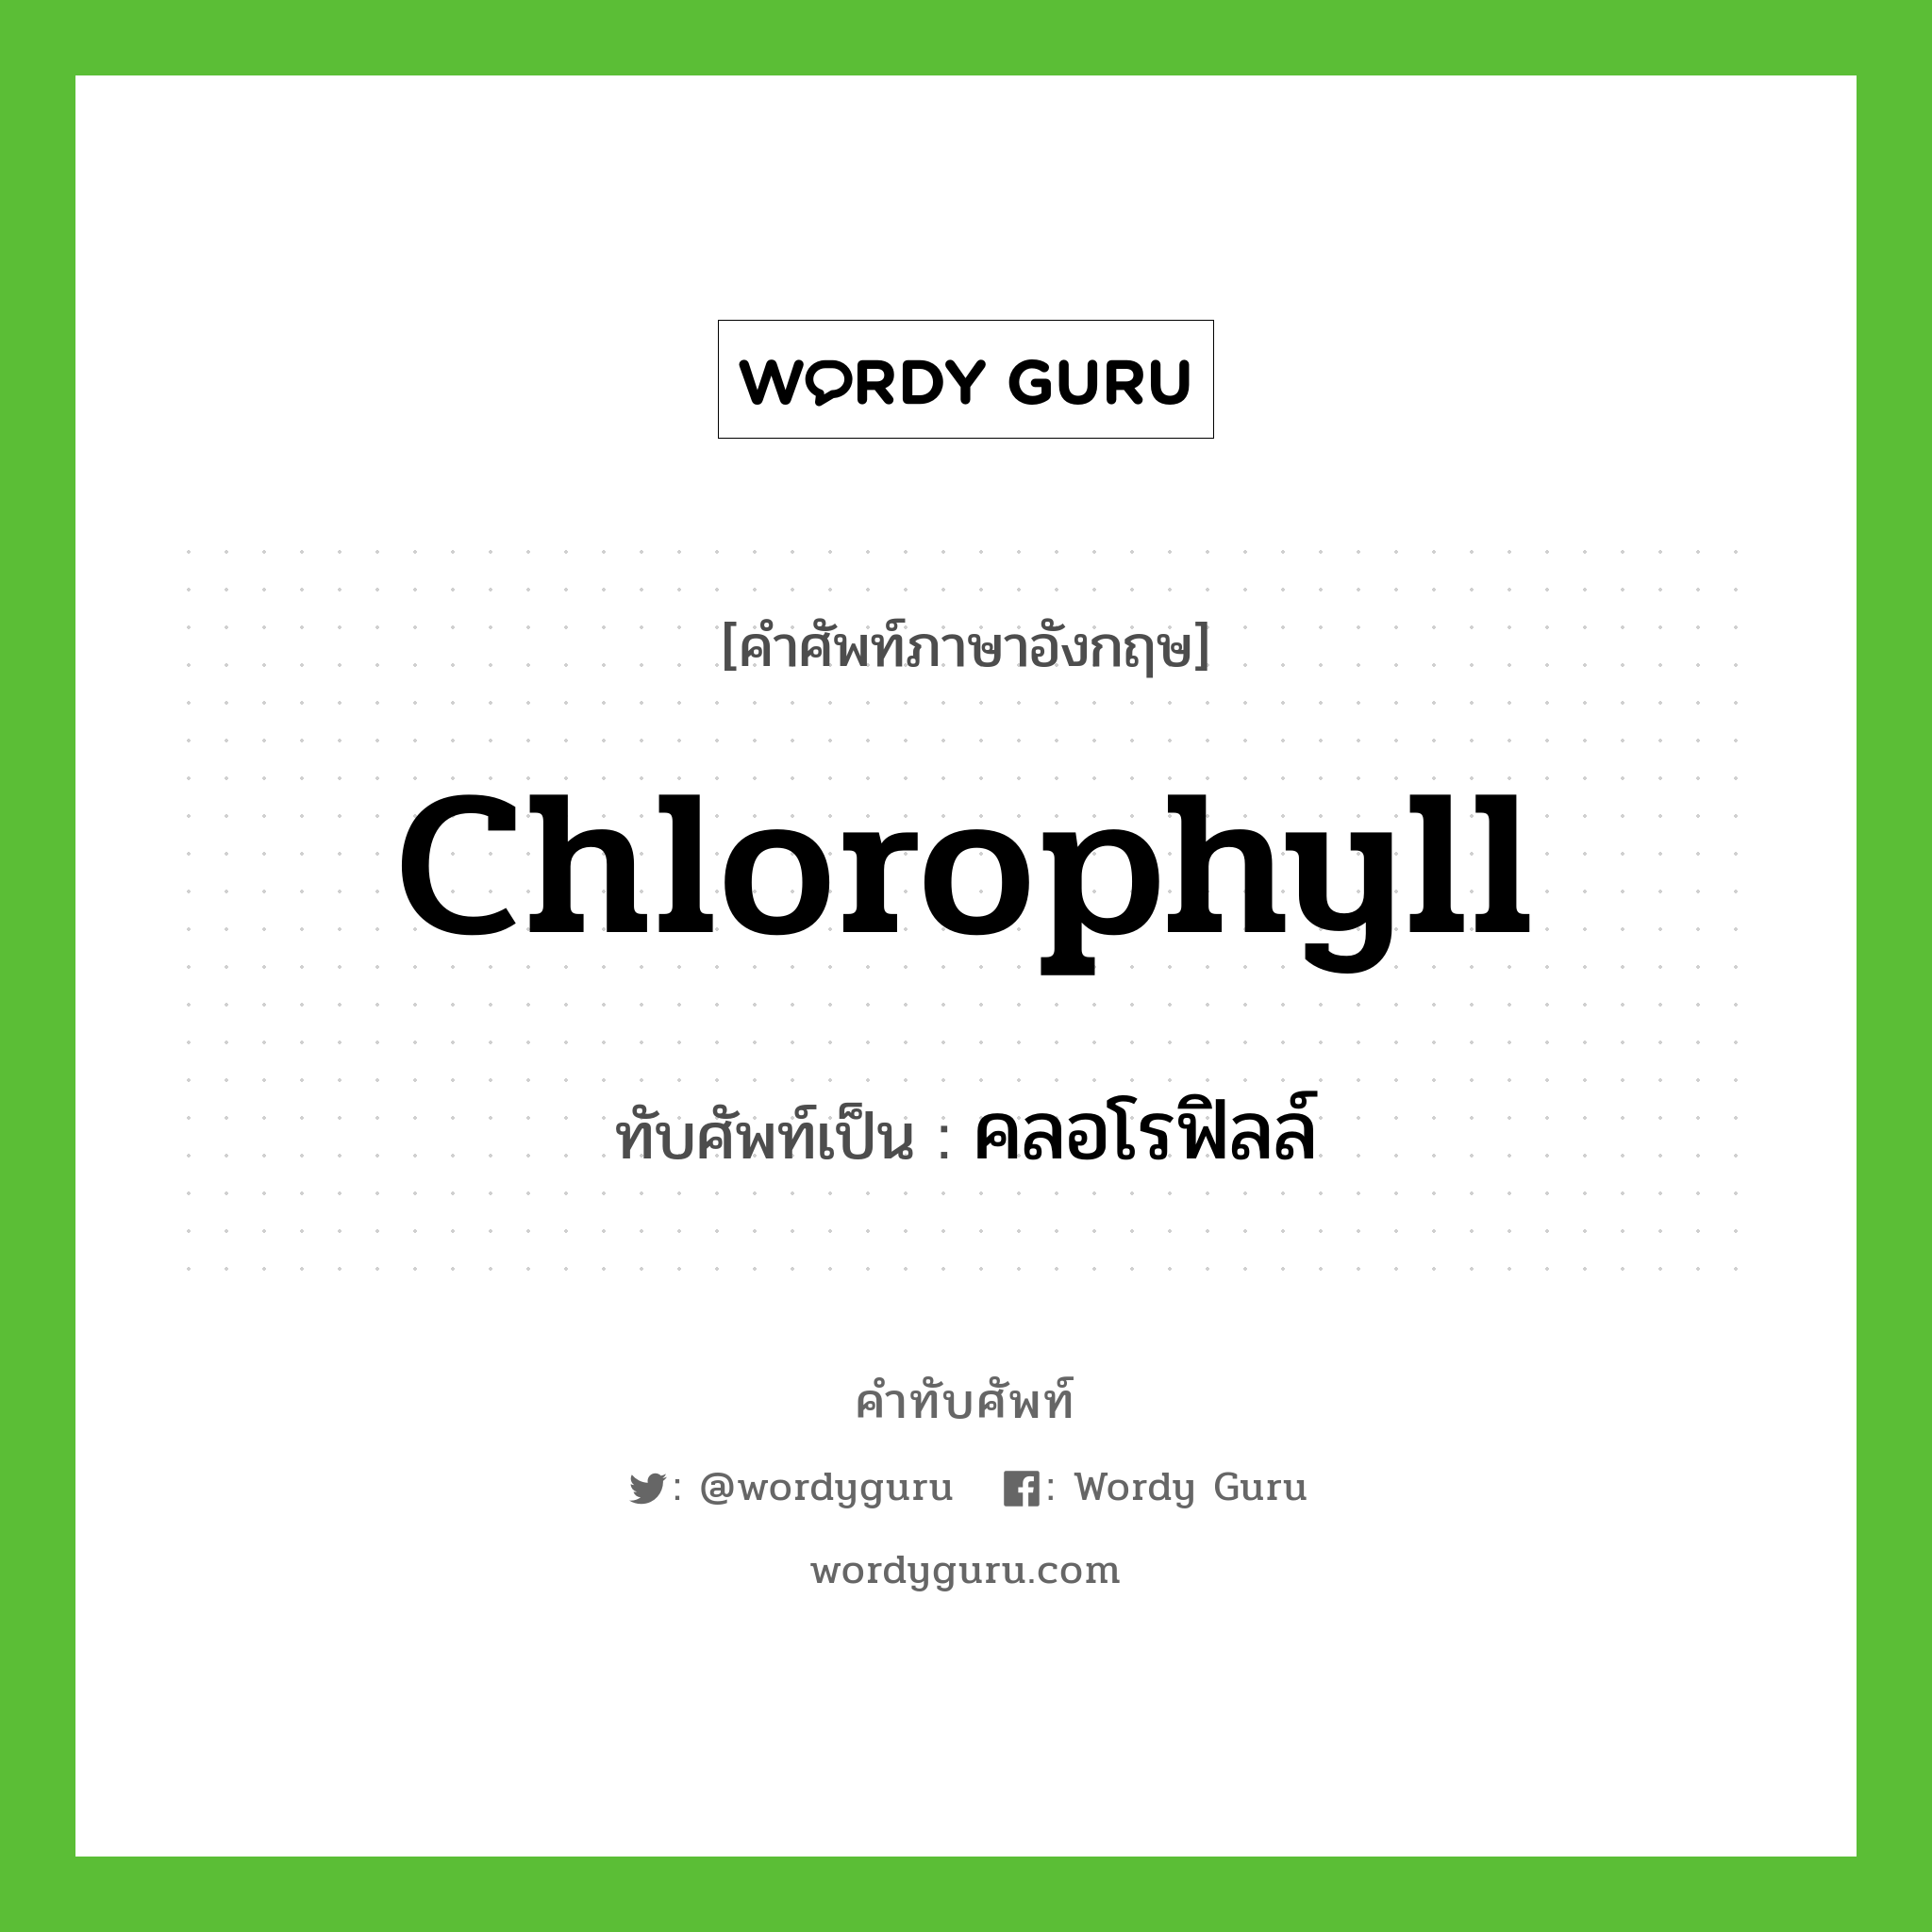 chlorophyll เขียนเป็นคำไทยว่าอะไร?, คำศัพท์ภาษาอังกฤษ chlorophyll ทับศัพท์เป็น คลอโรฟิลล์